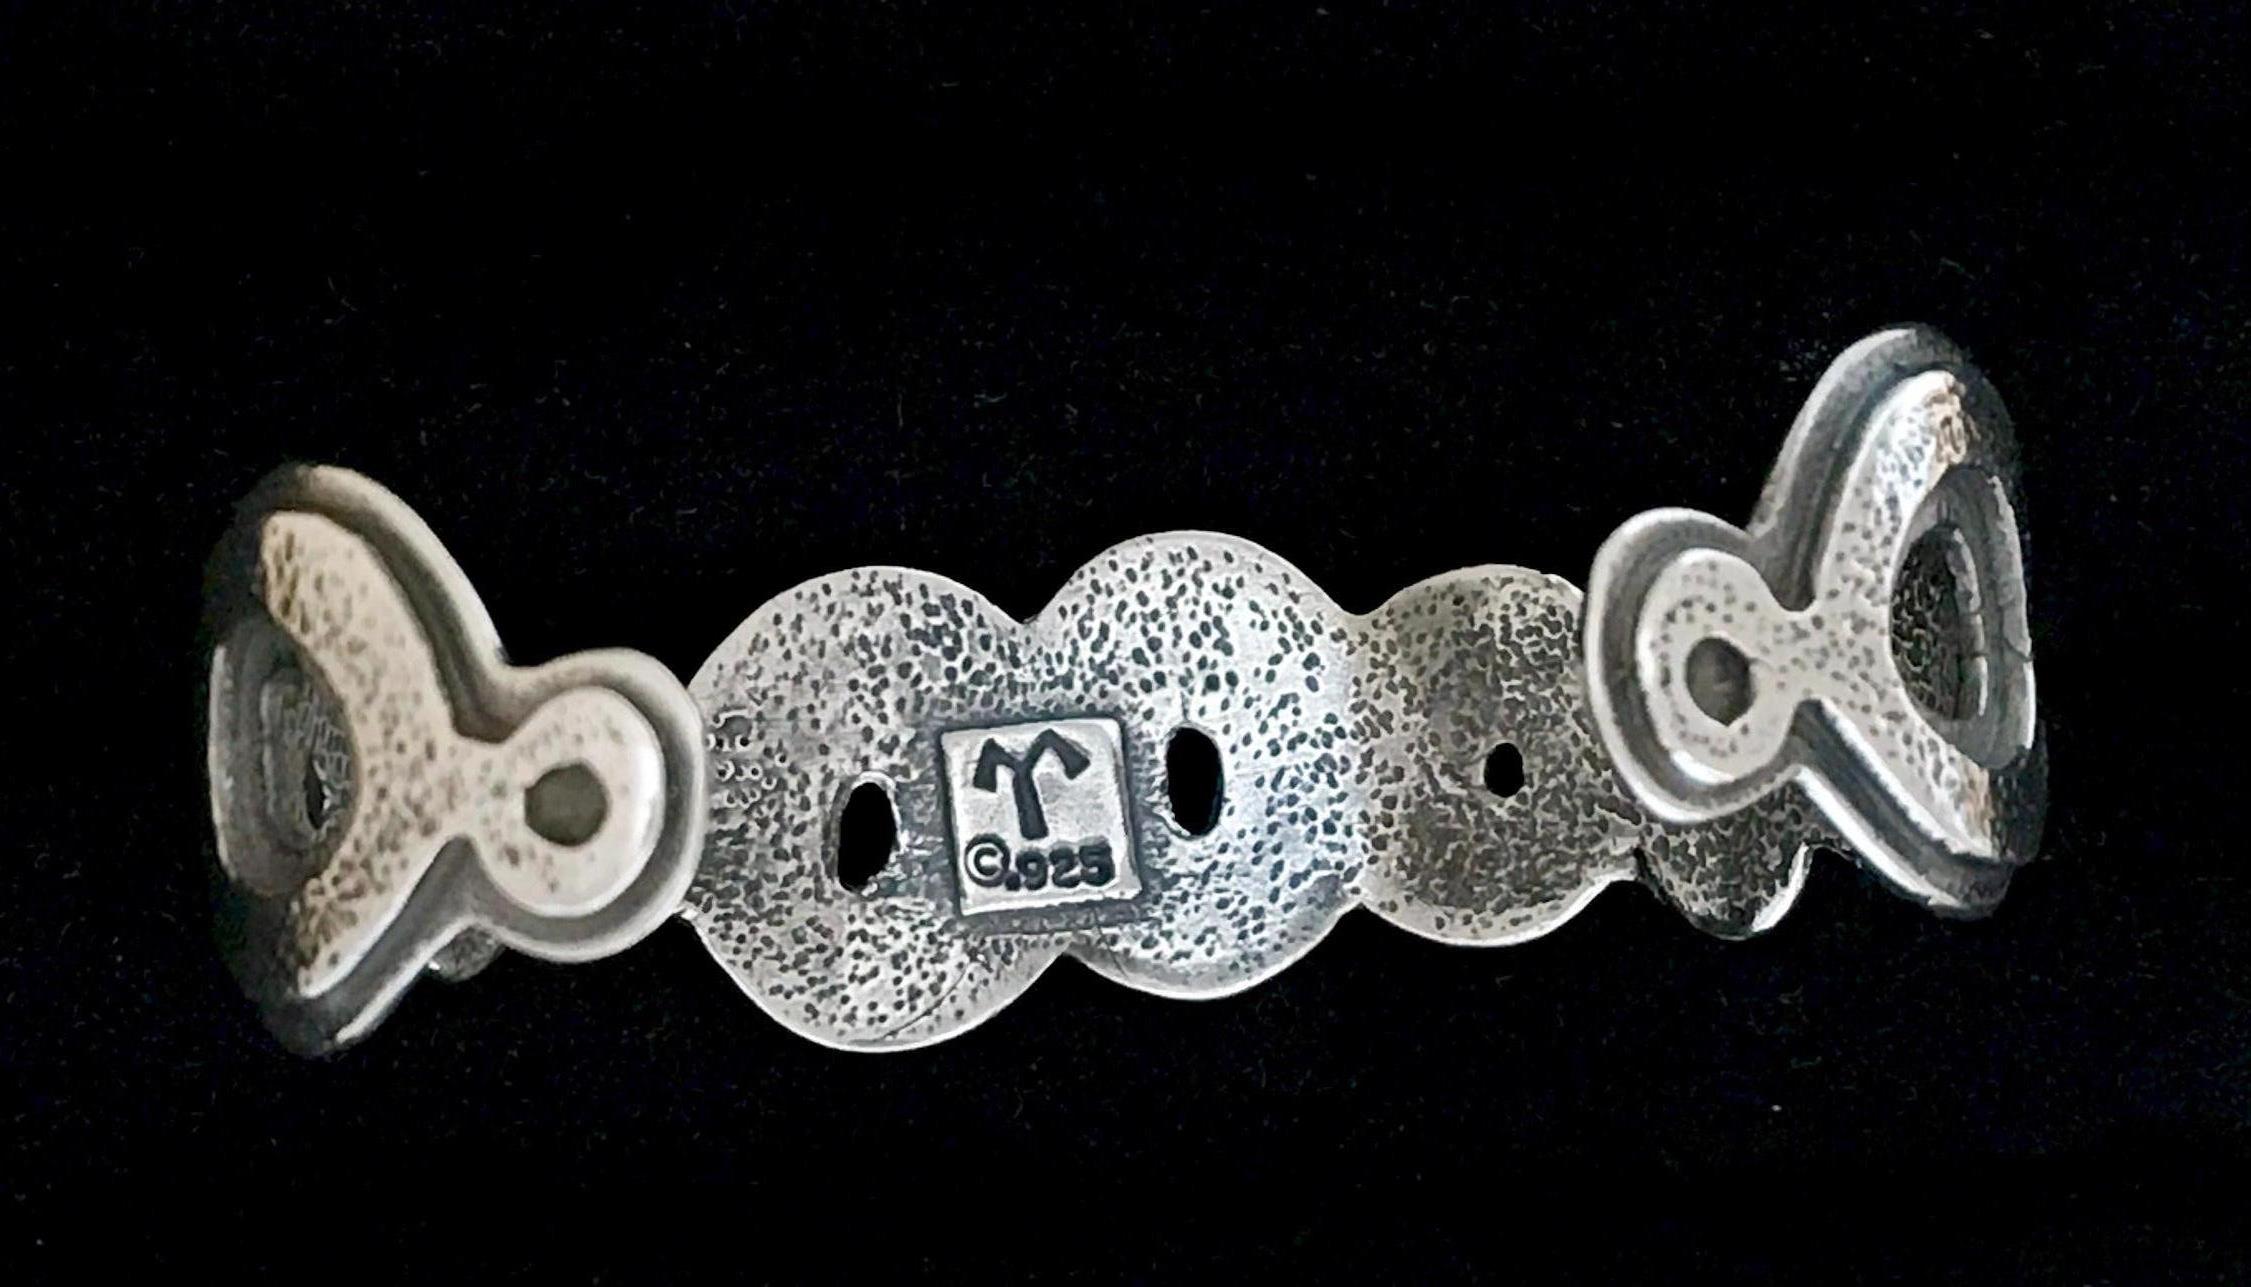 Spirit Pond, cast silver bracelet Melanie Yazzie Navajo water designs
Native American

Cast sterling silver bracelet. 5.5